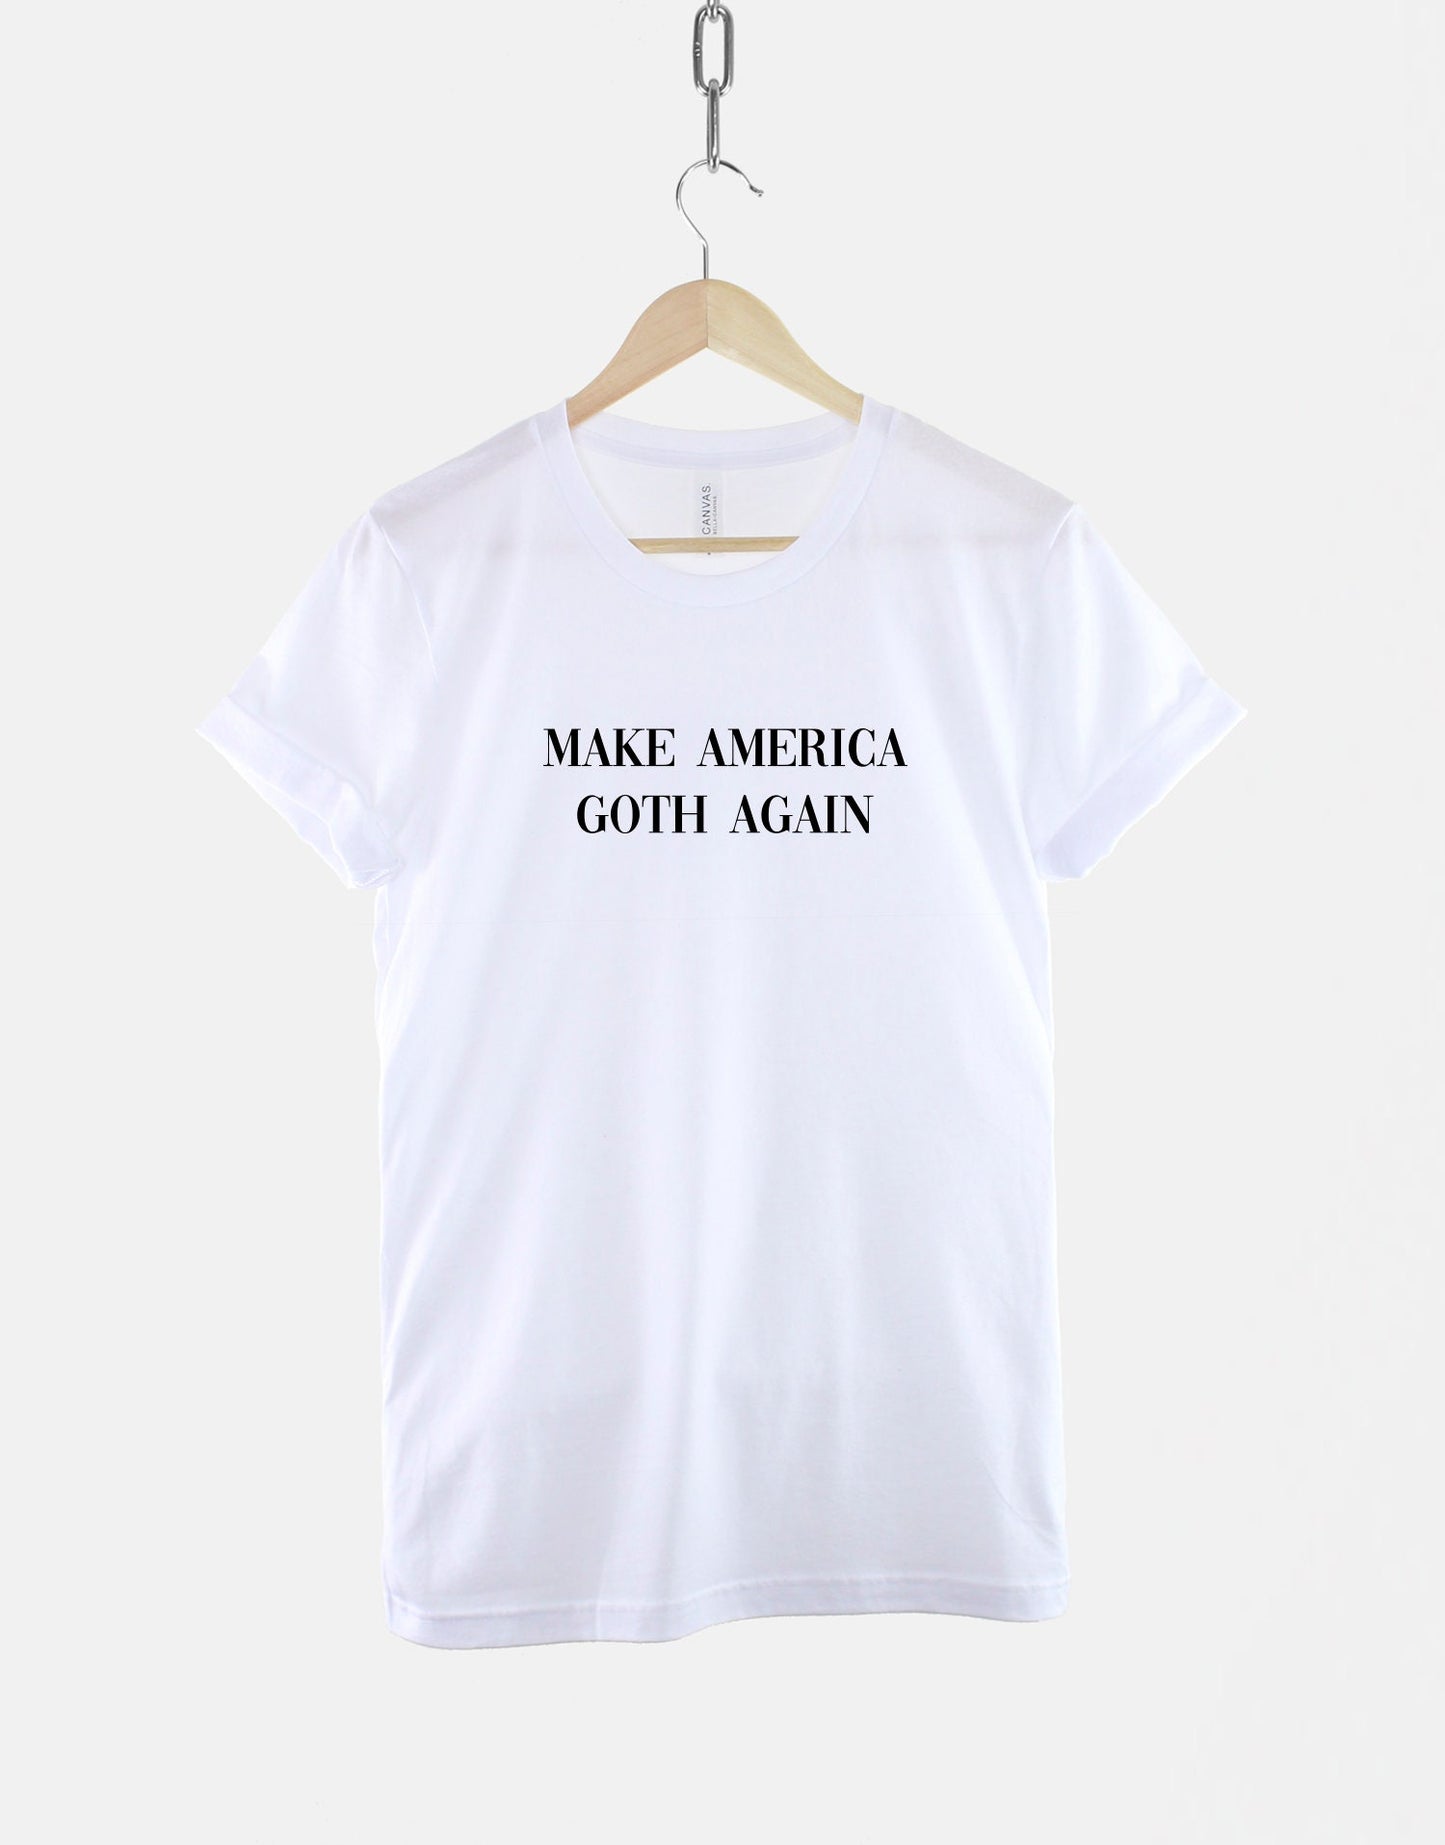 Make America Goth Again Tshirt - Build Bridges Not Walls Slogan T-Shirt